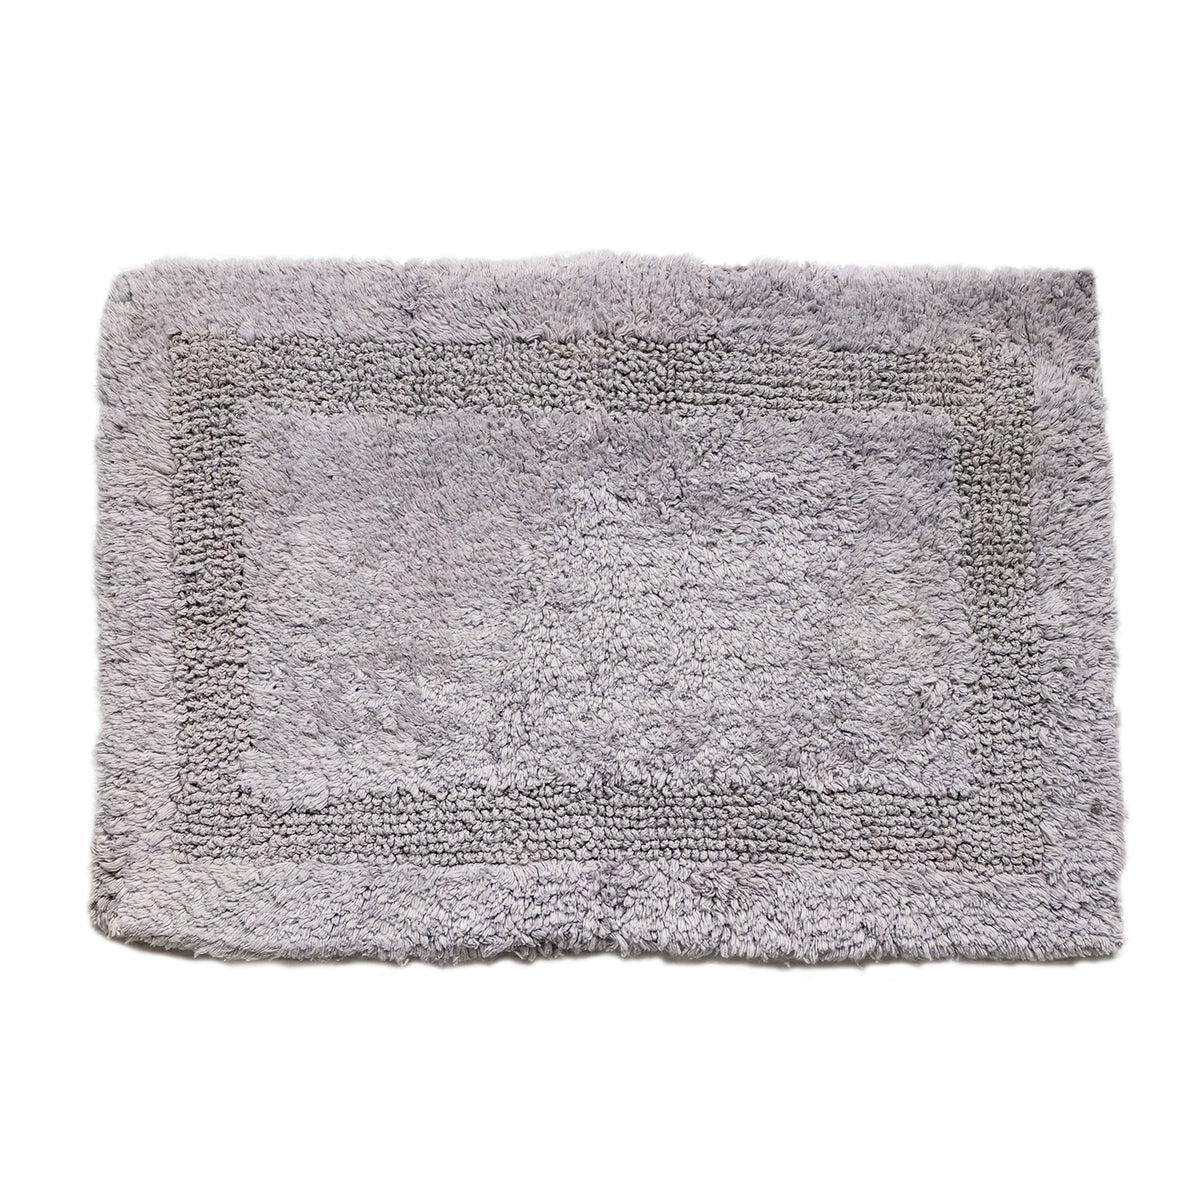 Cotton Quickdry Bath Mat Grey Colour (40x60cmx8mm)